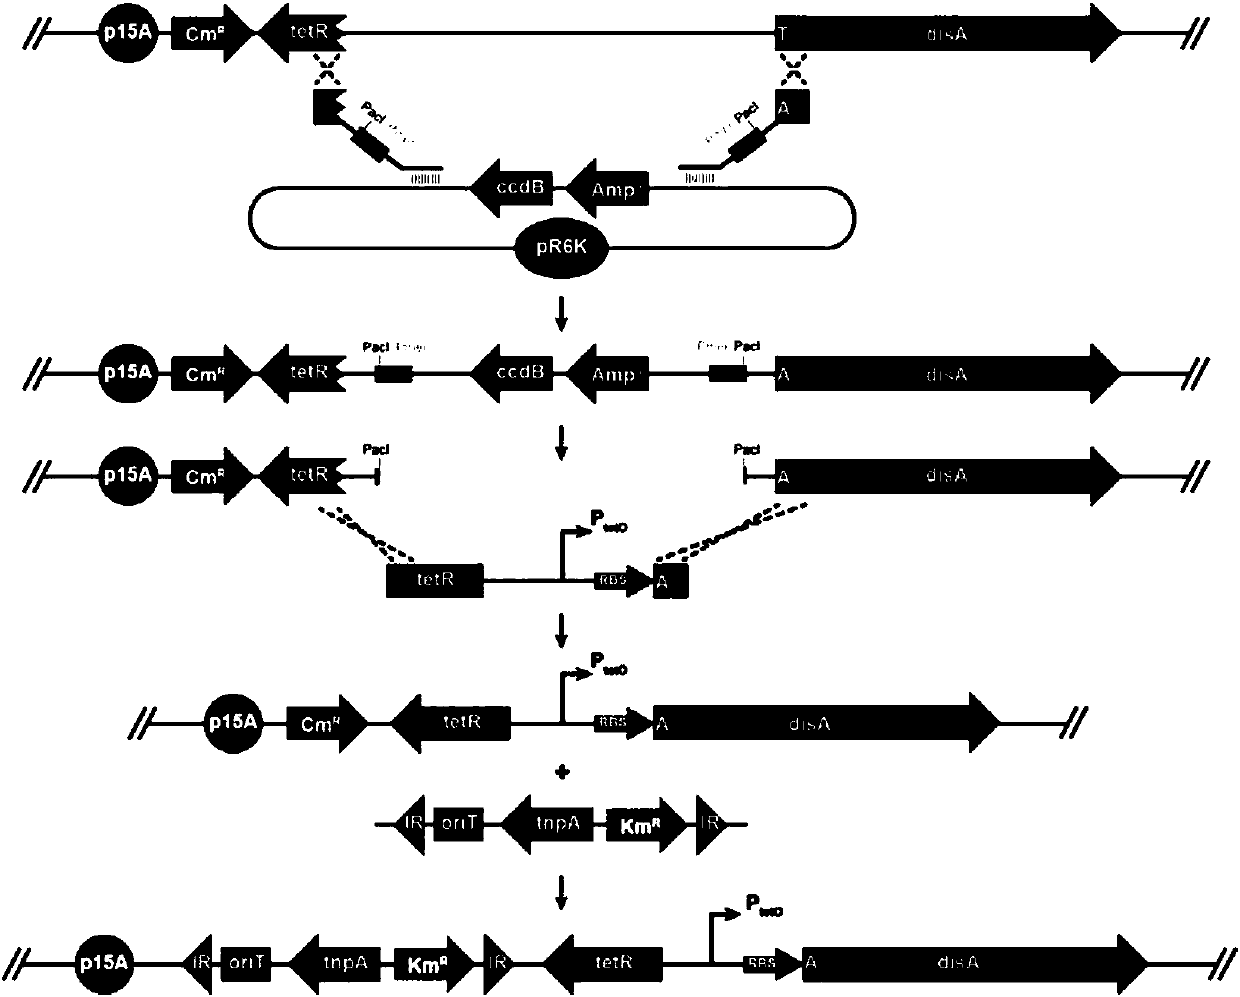 Engineering strain used for heterologously expressing Disorazole Z efficiently, gene cluster for establishing strain and application of strain